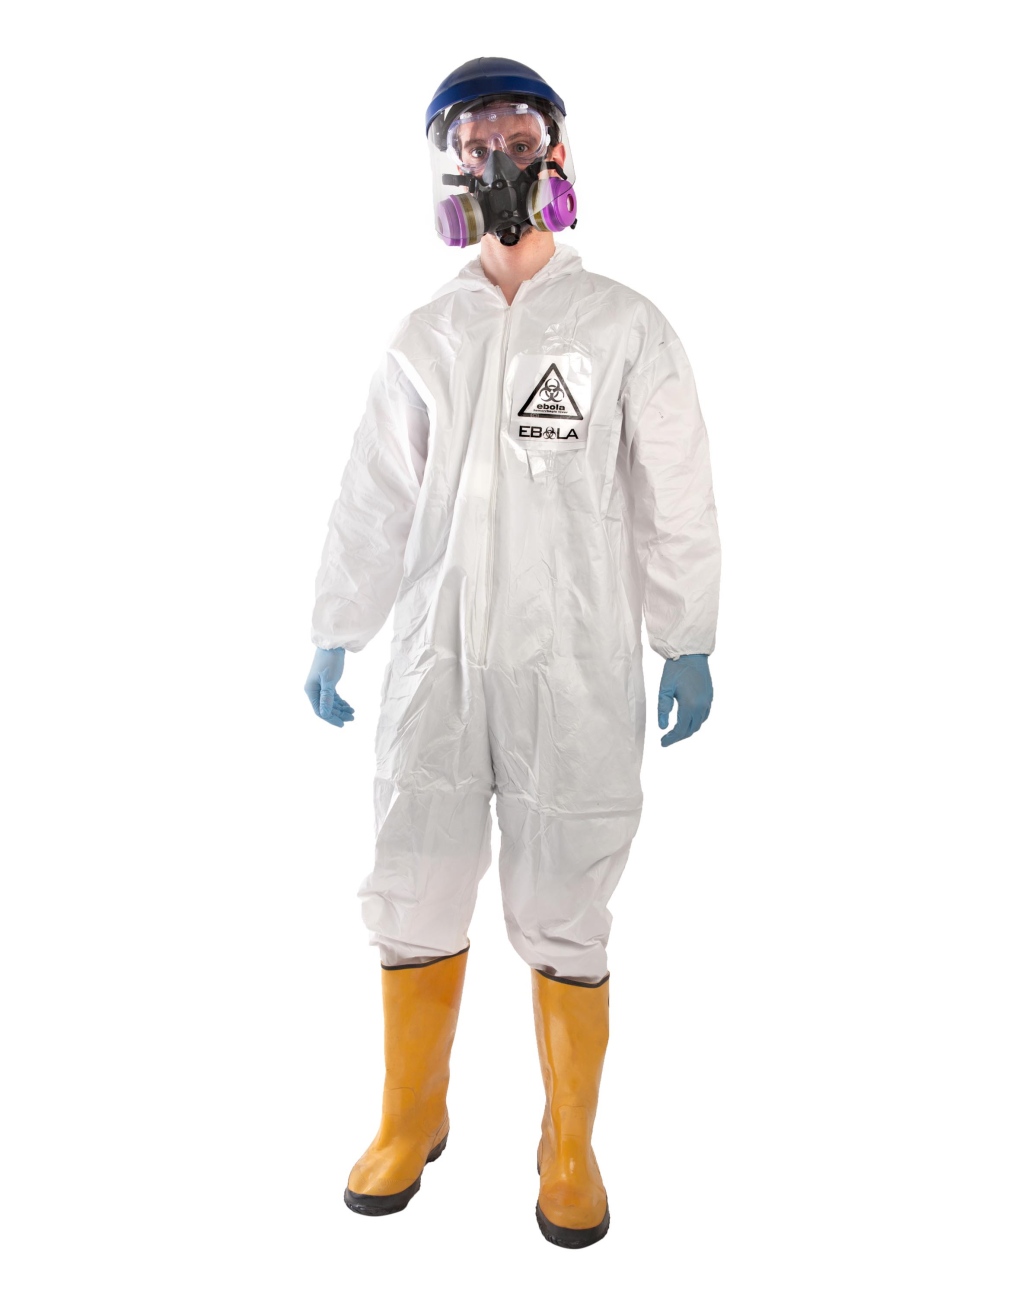 Ebola hazmat costume